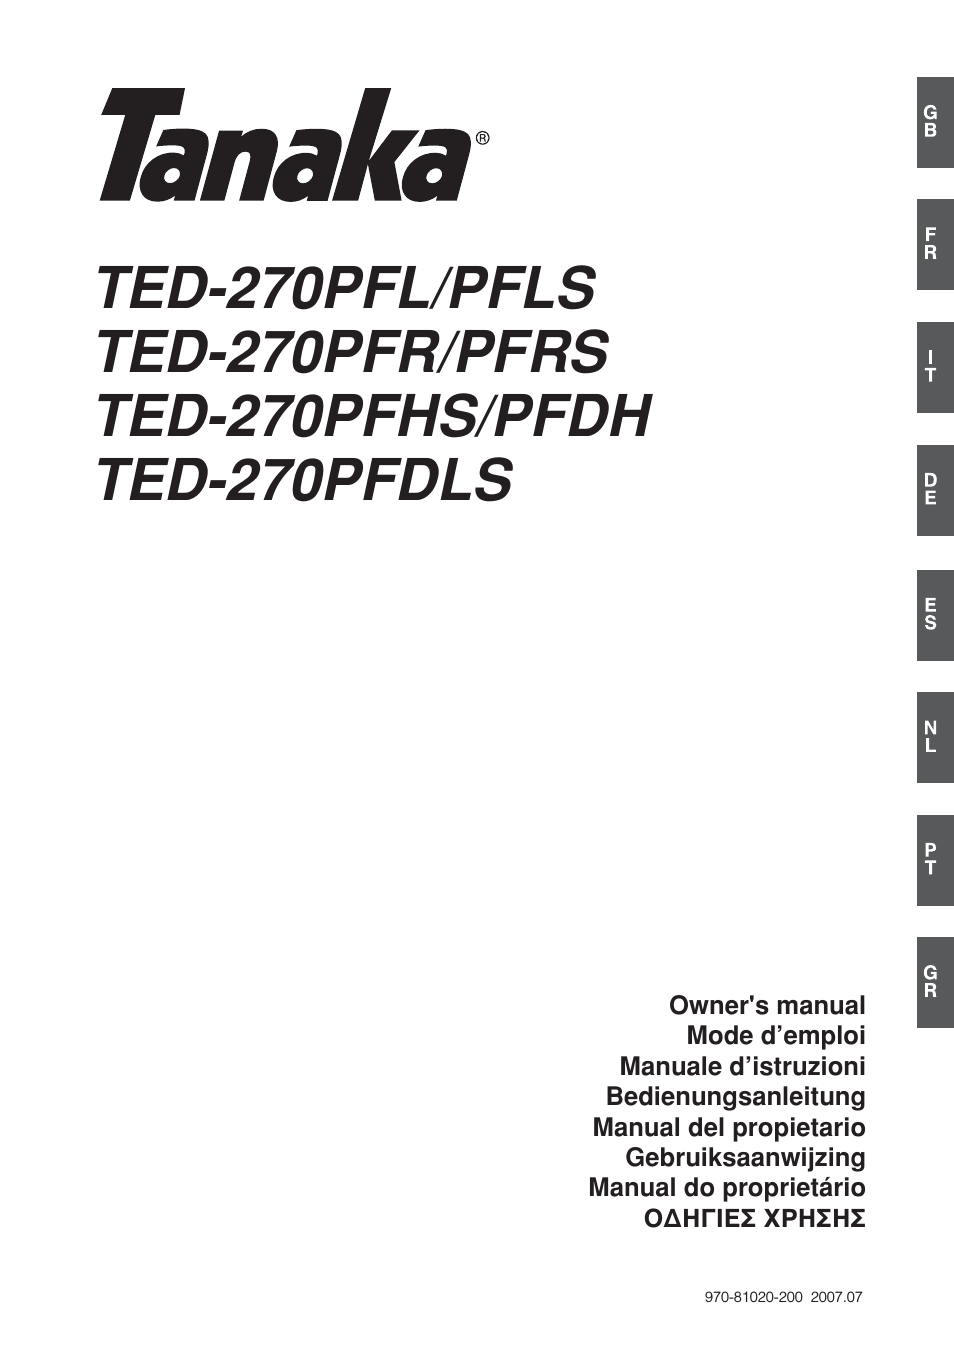 TED-270PFDLS